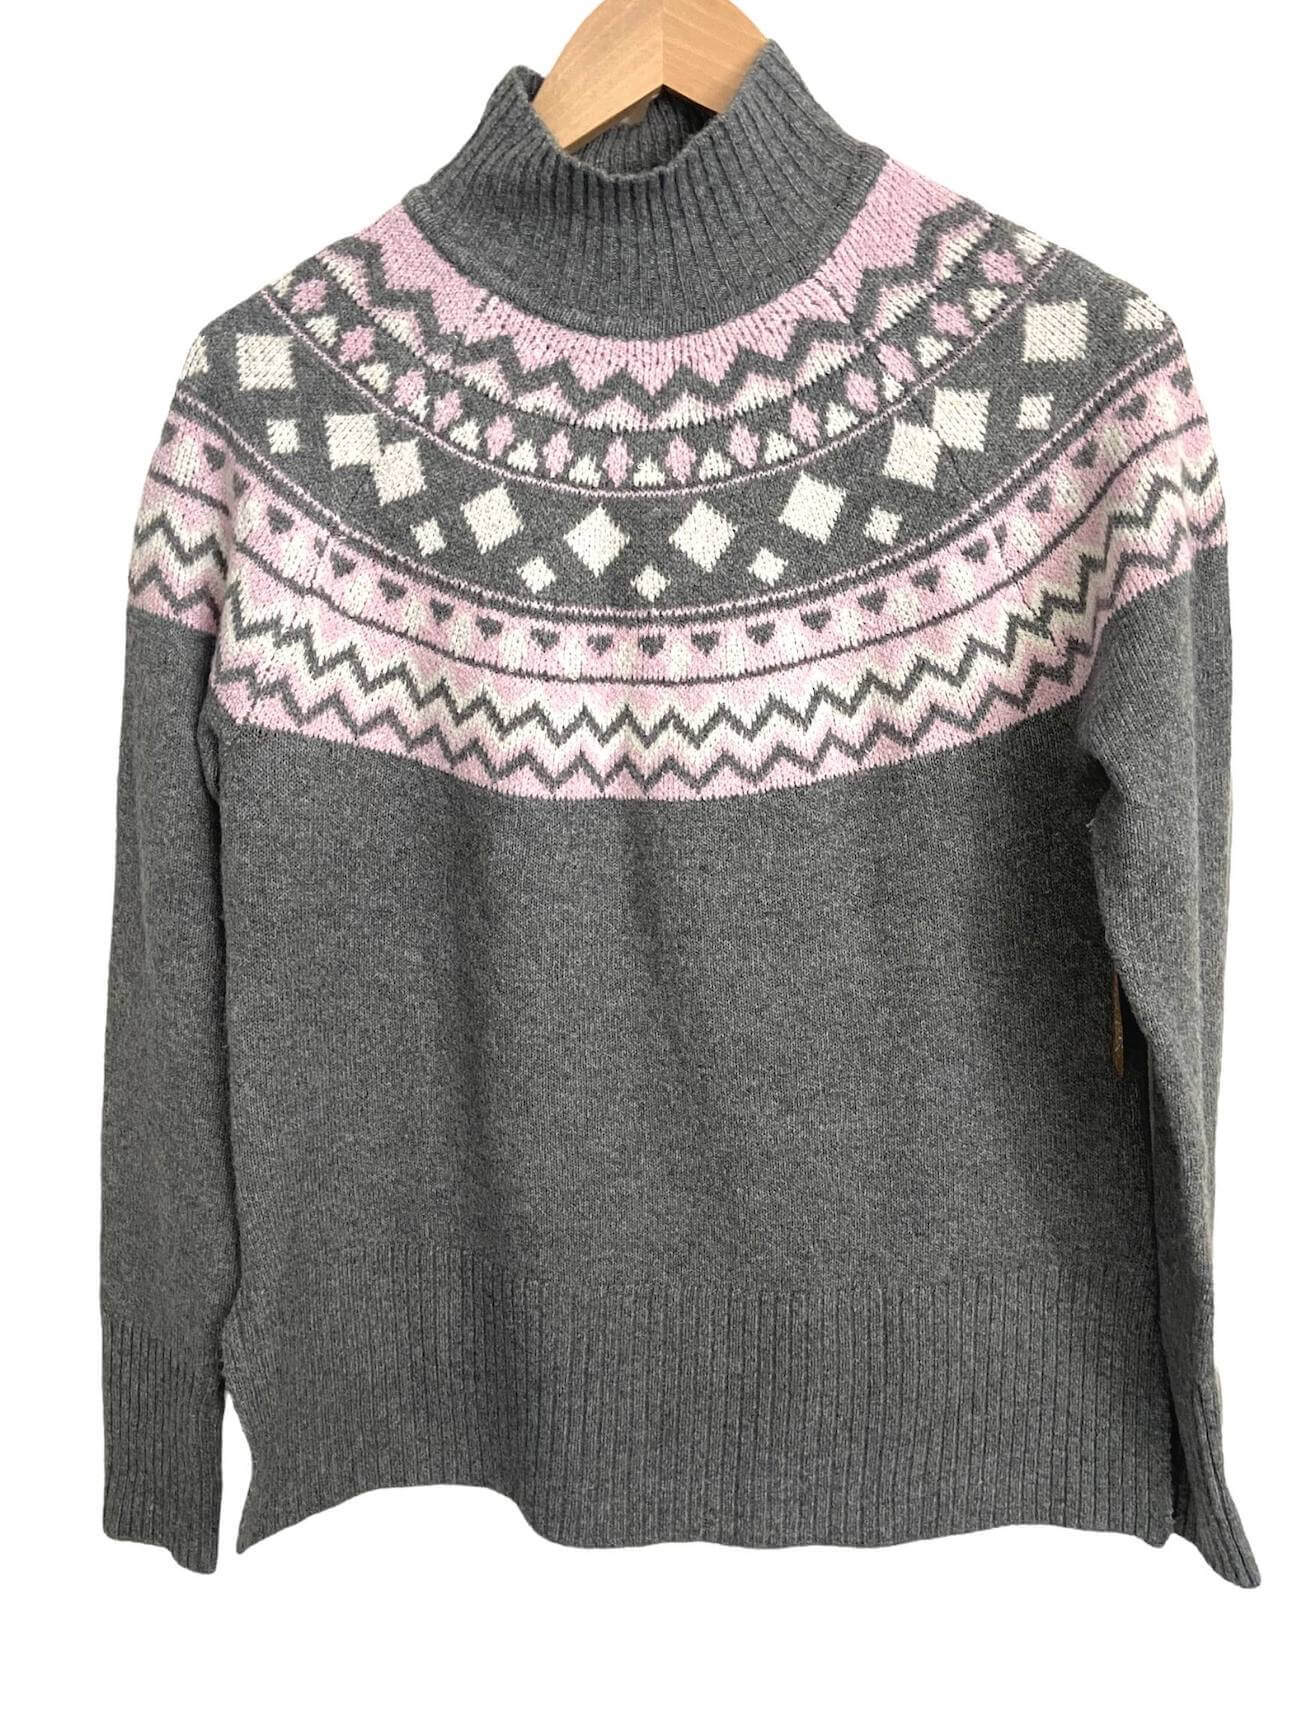 Cool Summer TAHARI gray pink fair isle sweater